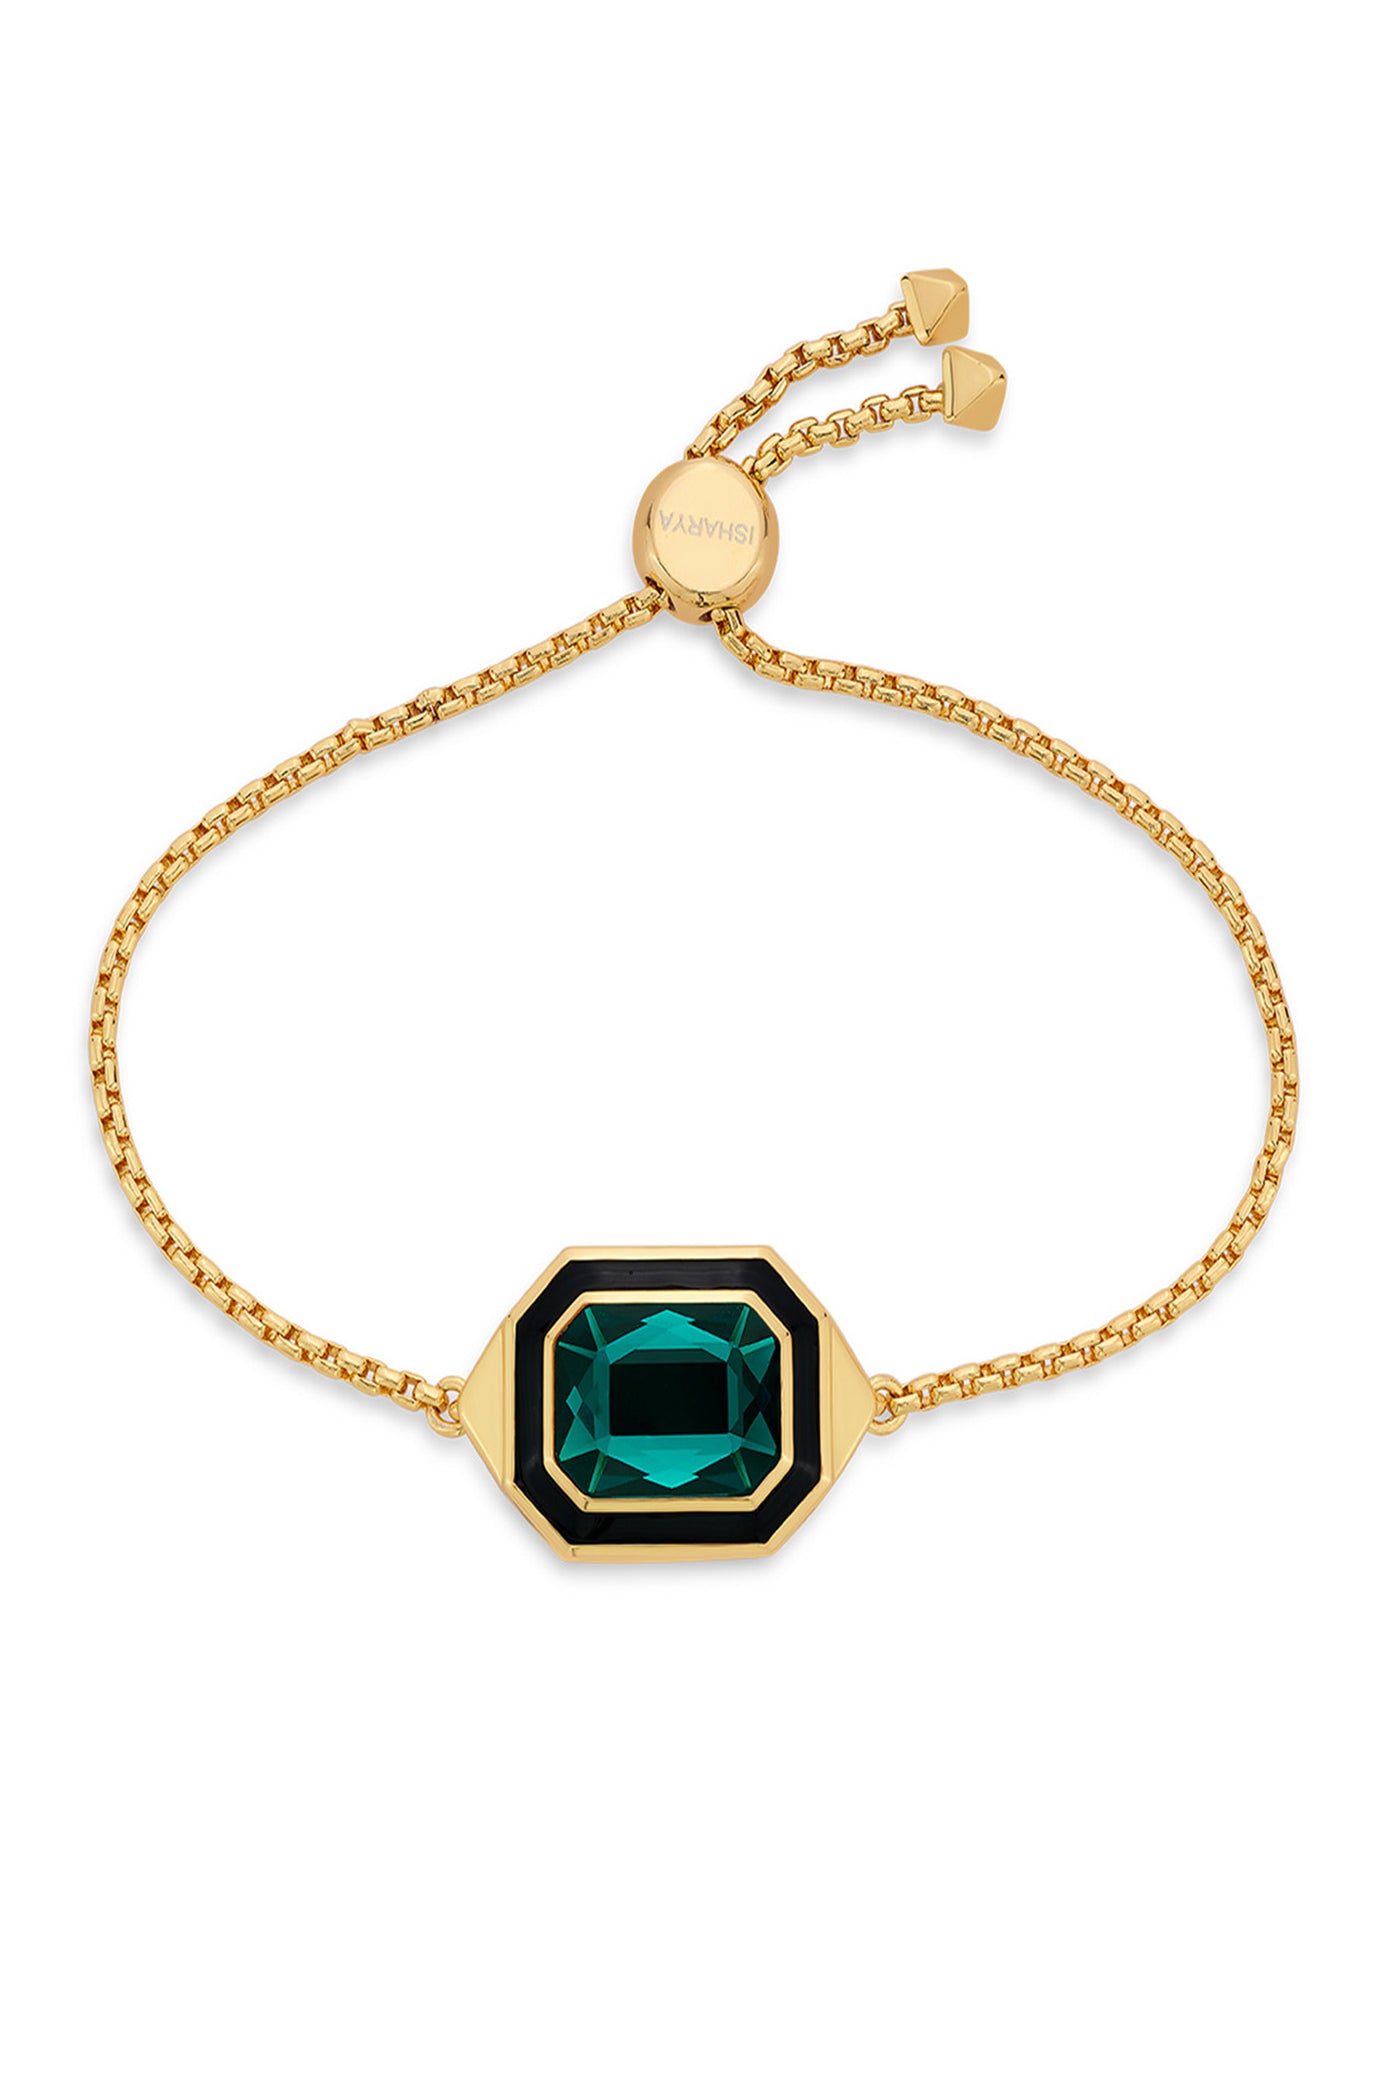 Isharya B-dazzle Green Crystal Enamel Bracelet In 18Kt Gold Plated fashion jewellery online shopping melange singapore indian designer wear